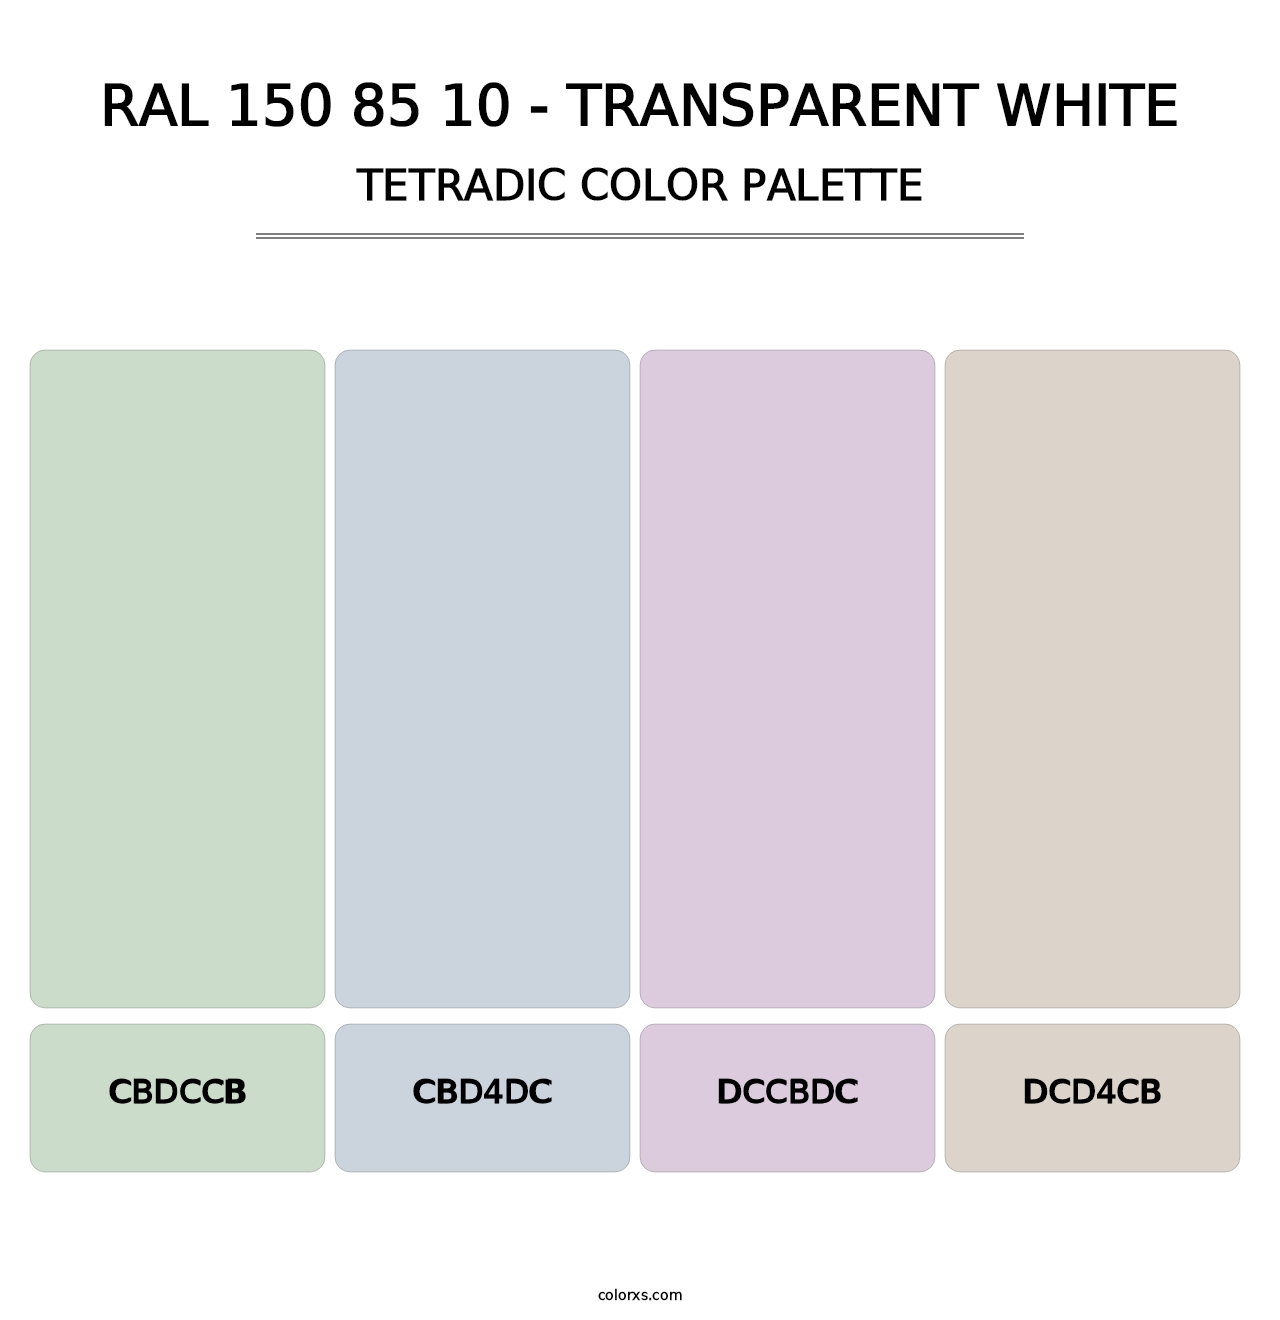 RAL 150 85 10 - Transparent White - Tetradic Color Palette